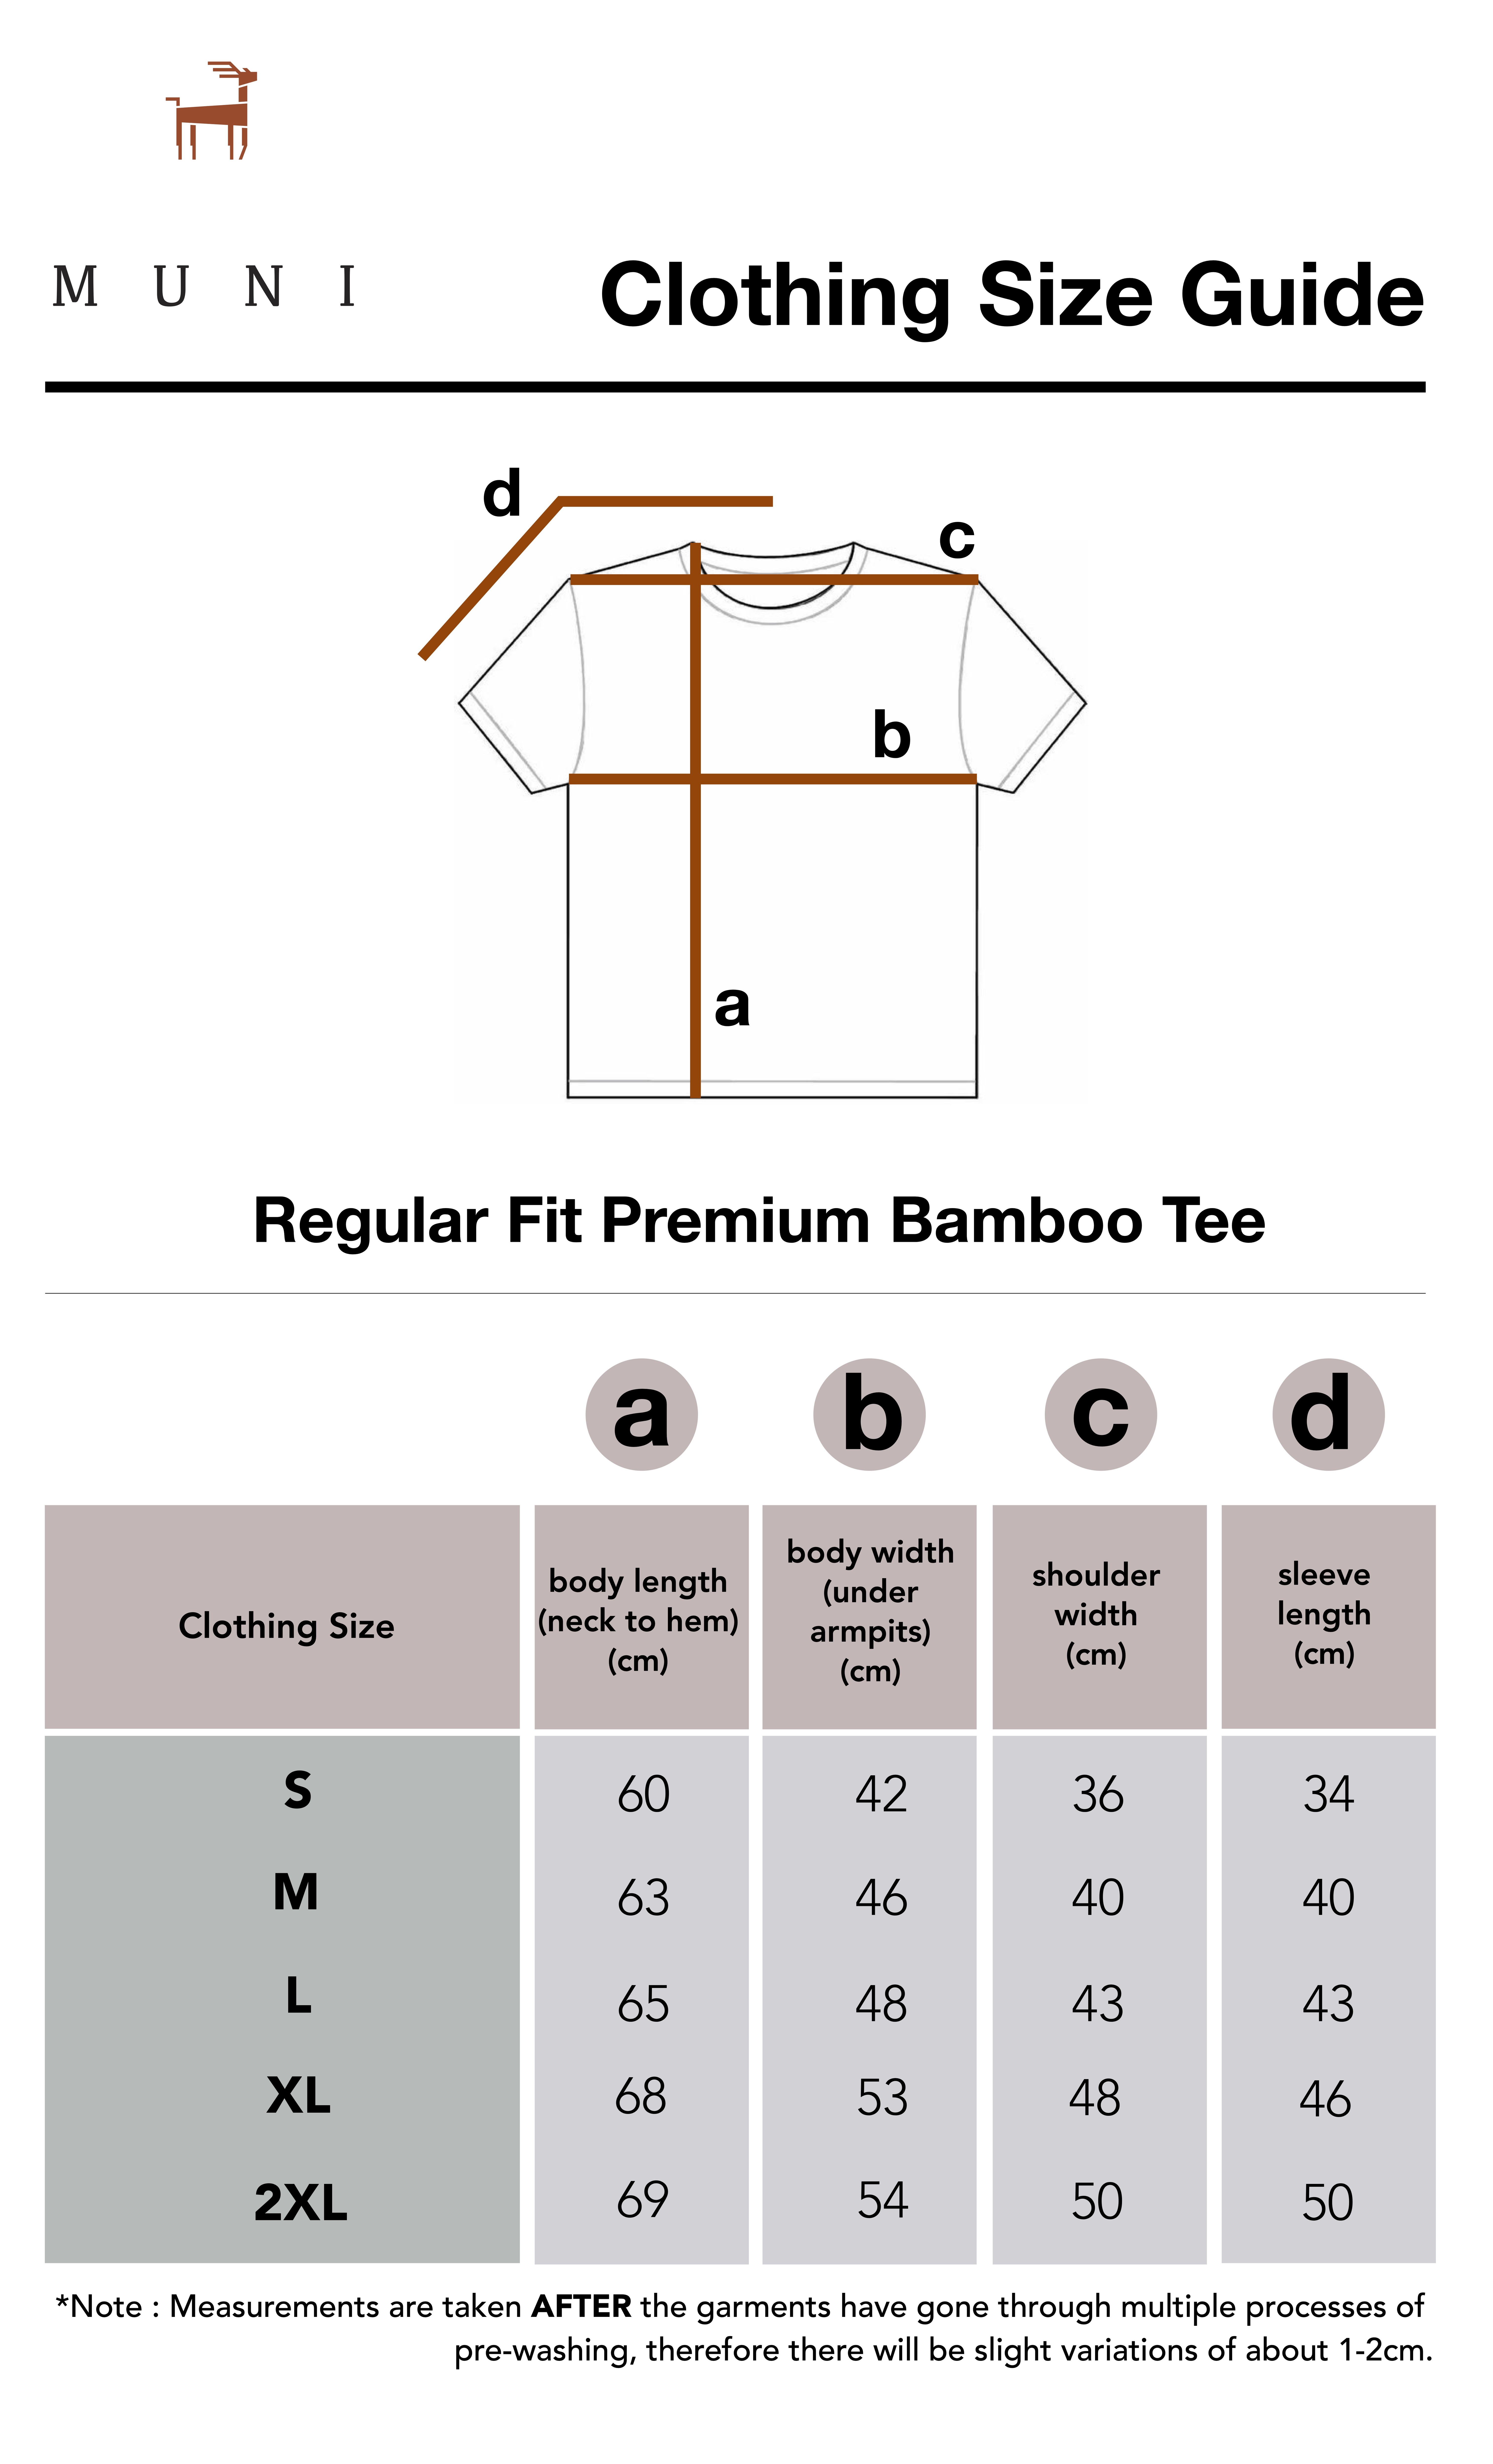 Reg fit Premium Bamboo Tee.jpg